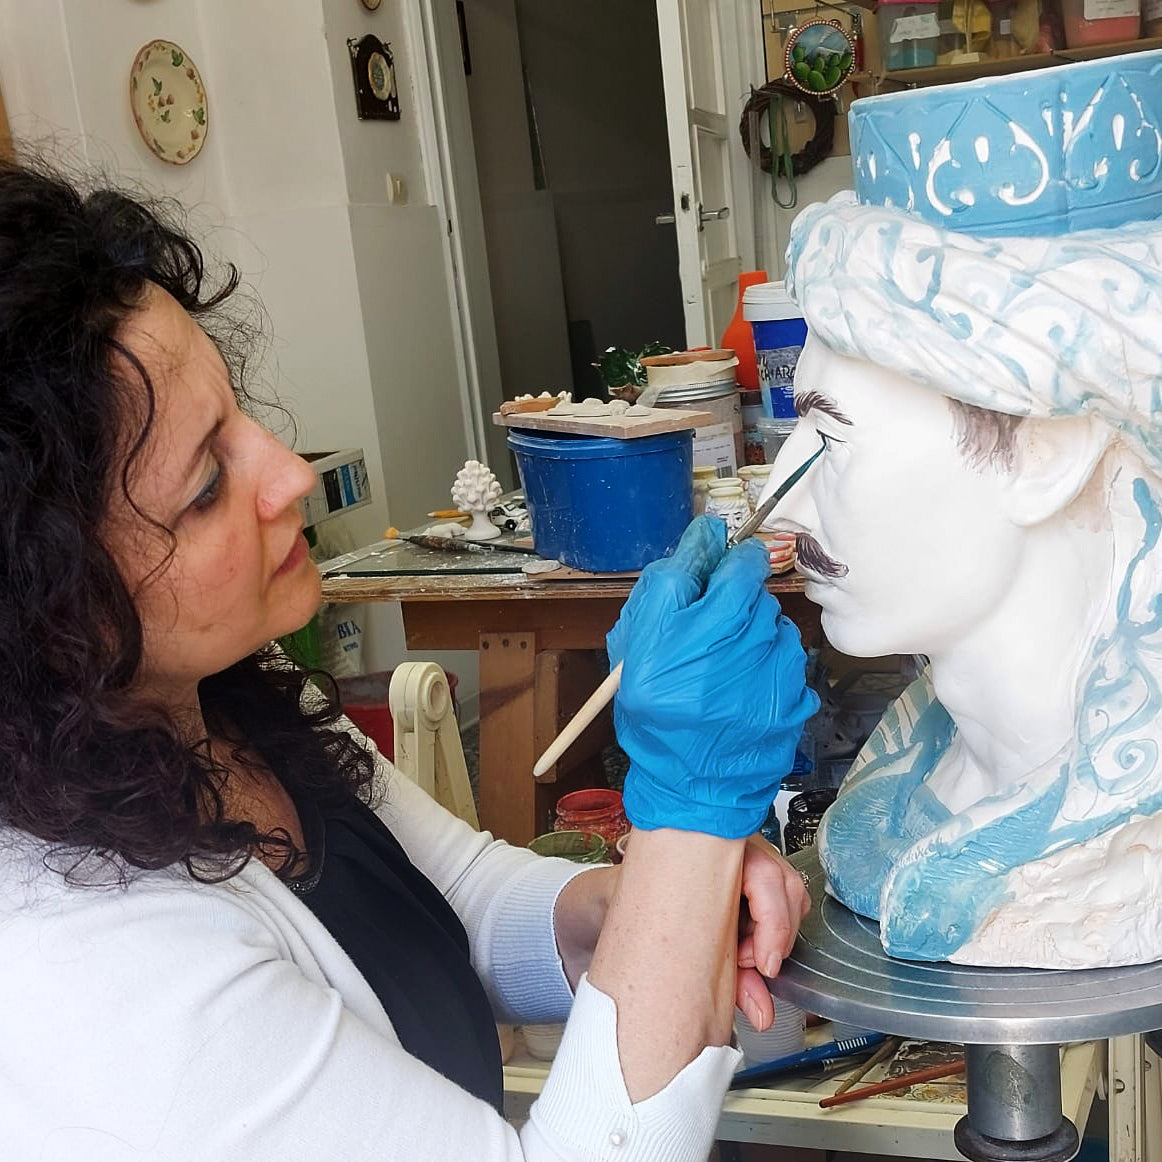 MICALE DI ARCIREALE: Deluxe Moorish Sicilian Head Vase - Woman Teal Tone Accents